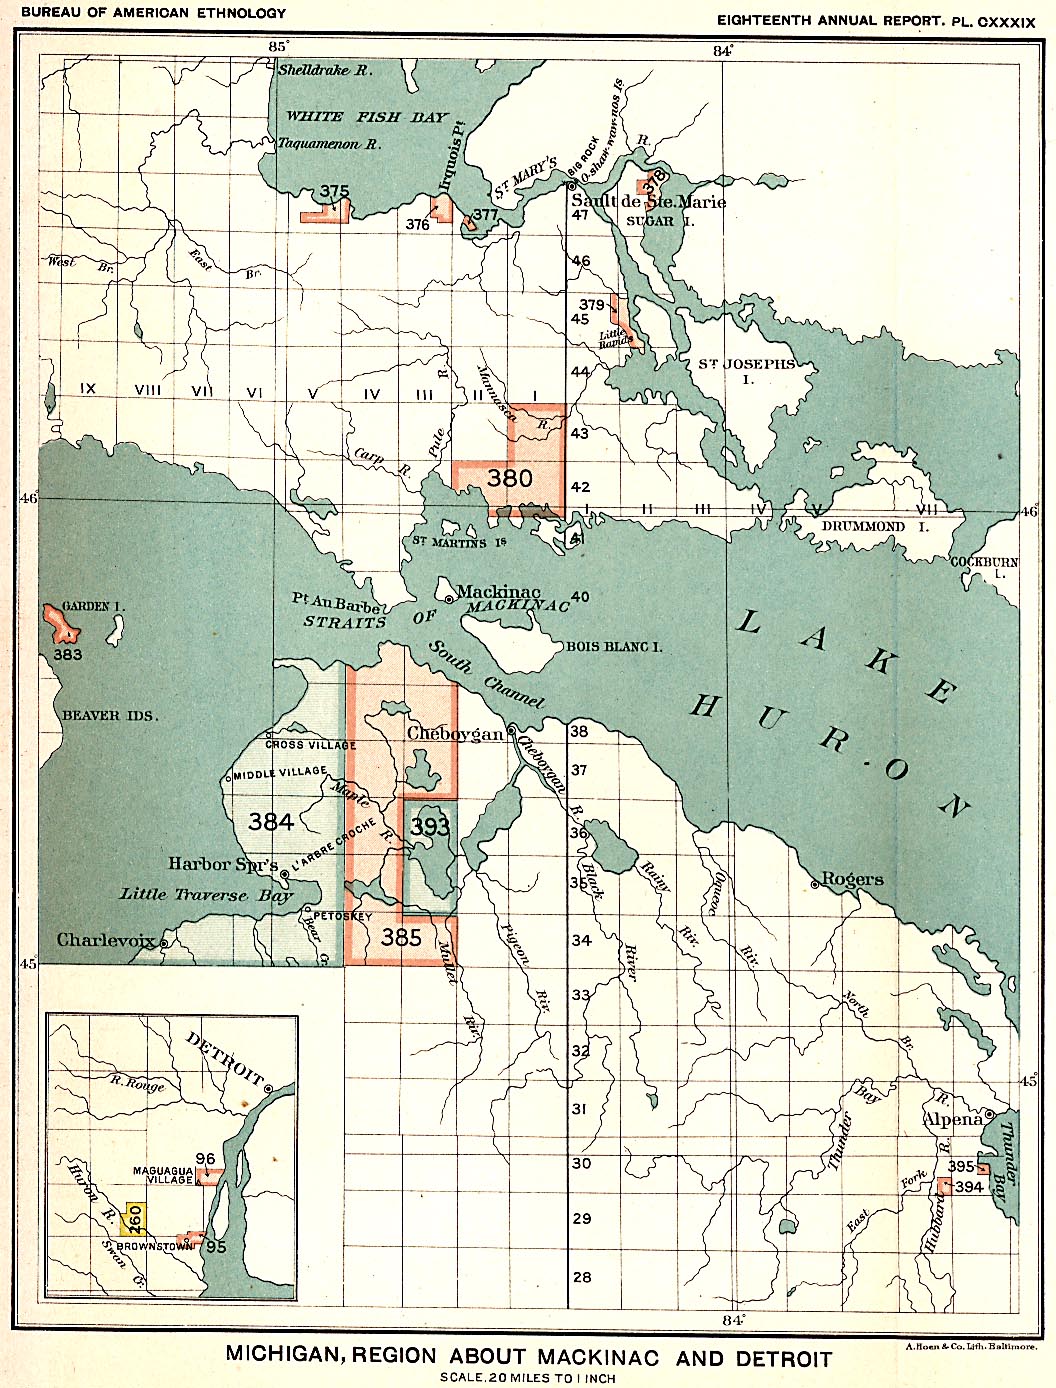  Michigan, Region about Mackinac & Detroit, 
Map 32